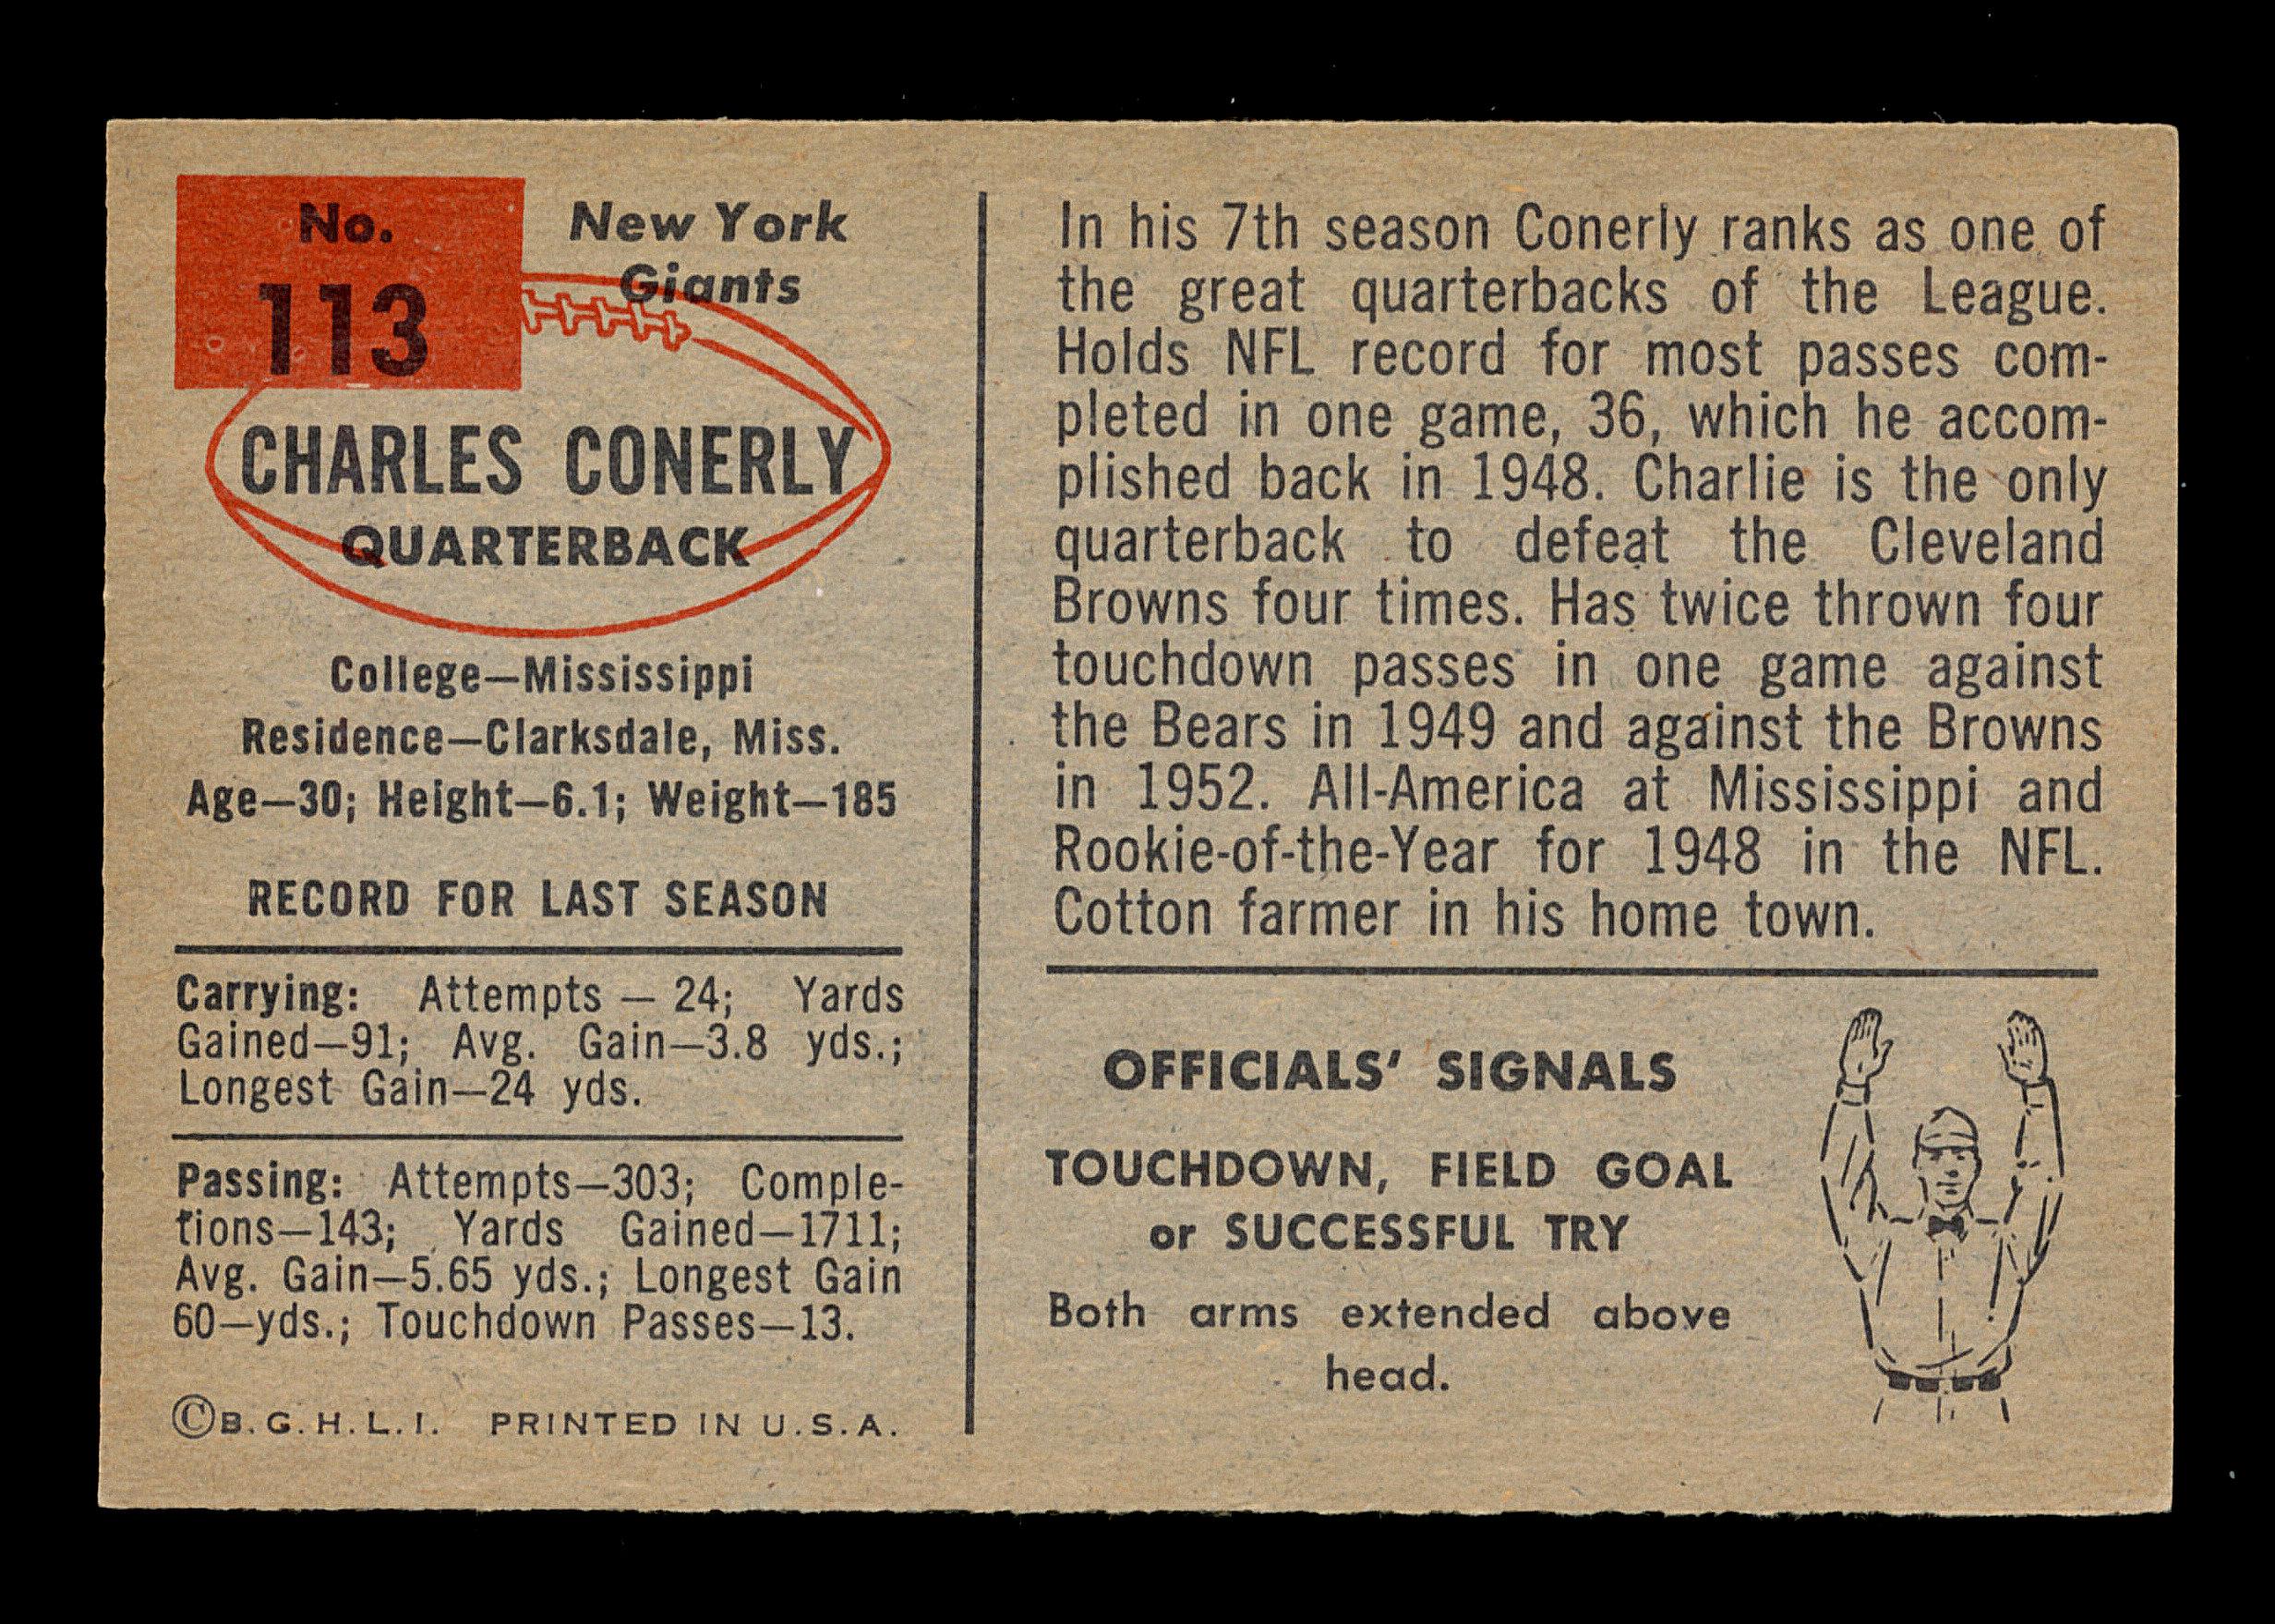 1954 Bowman Football Card #113 Charley Conerly New York Giants